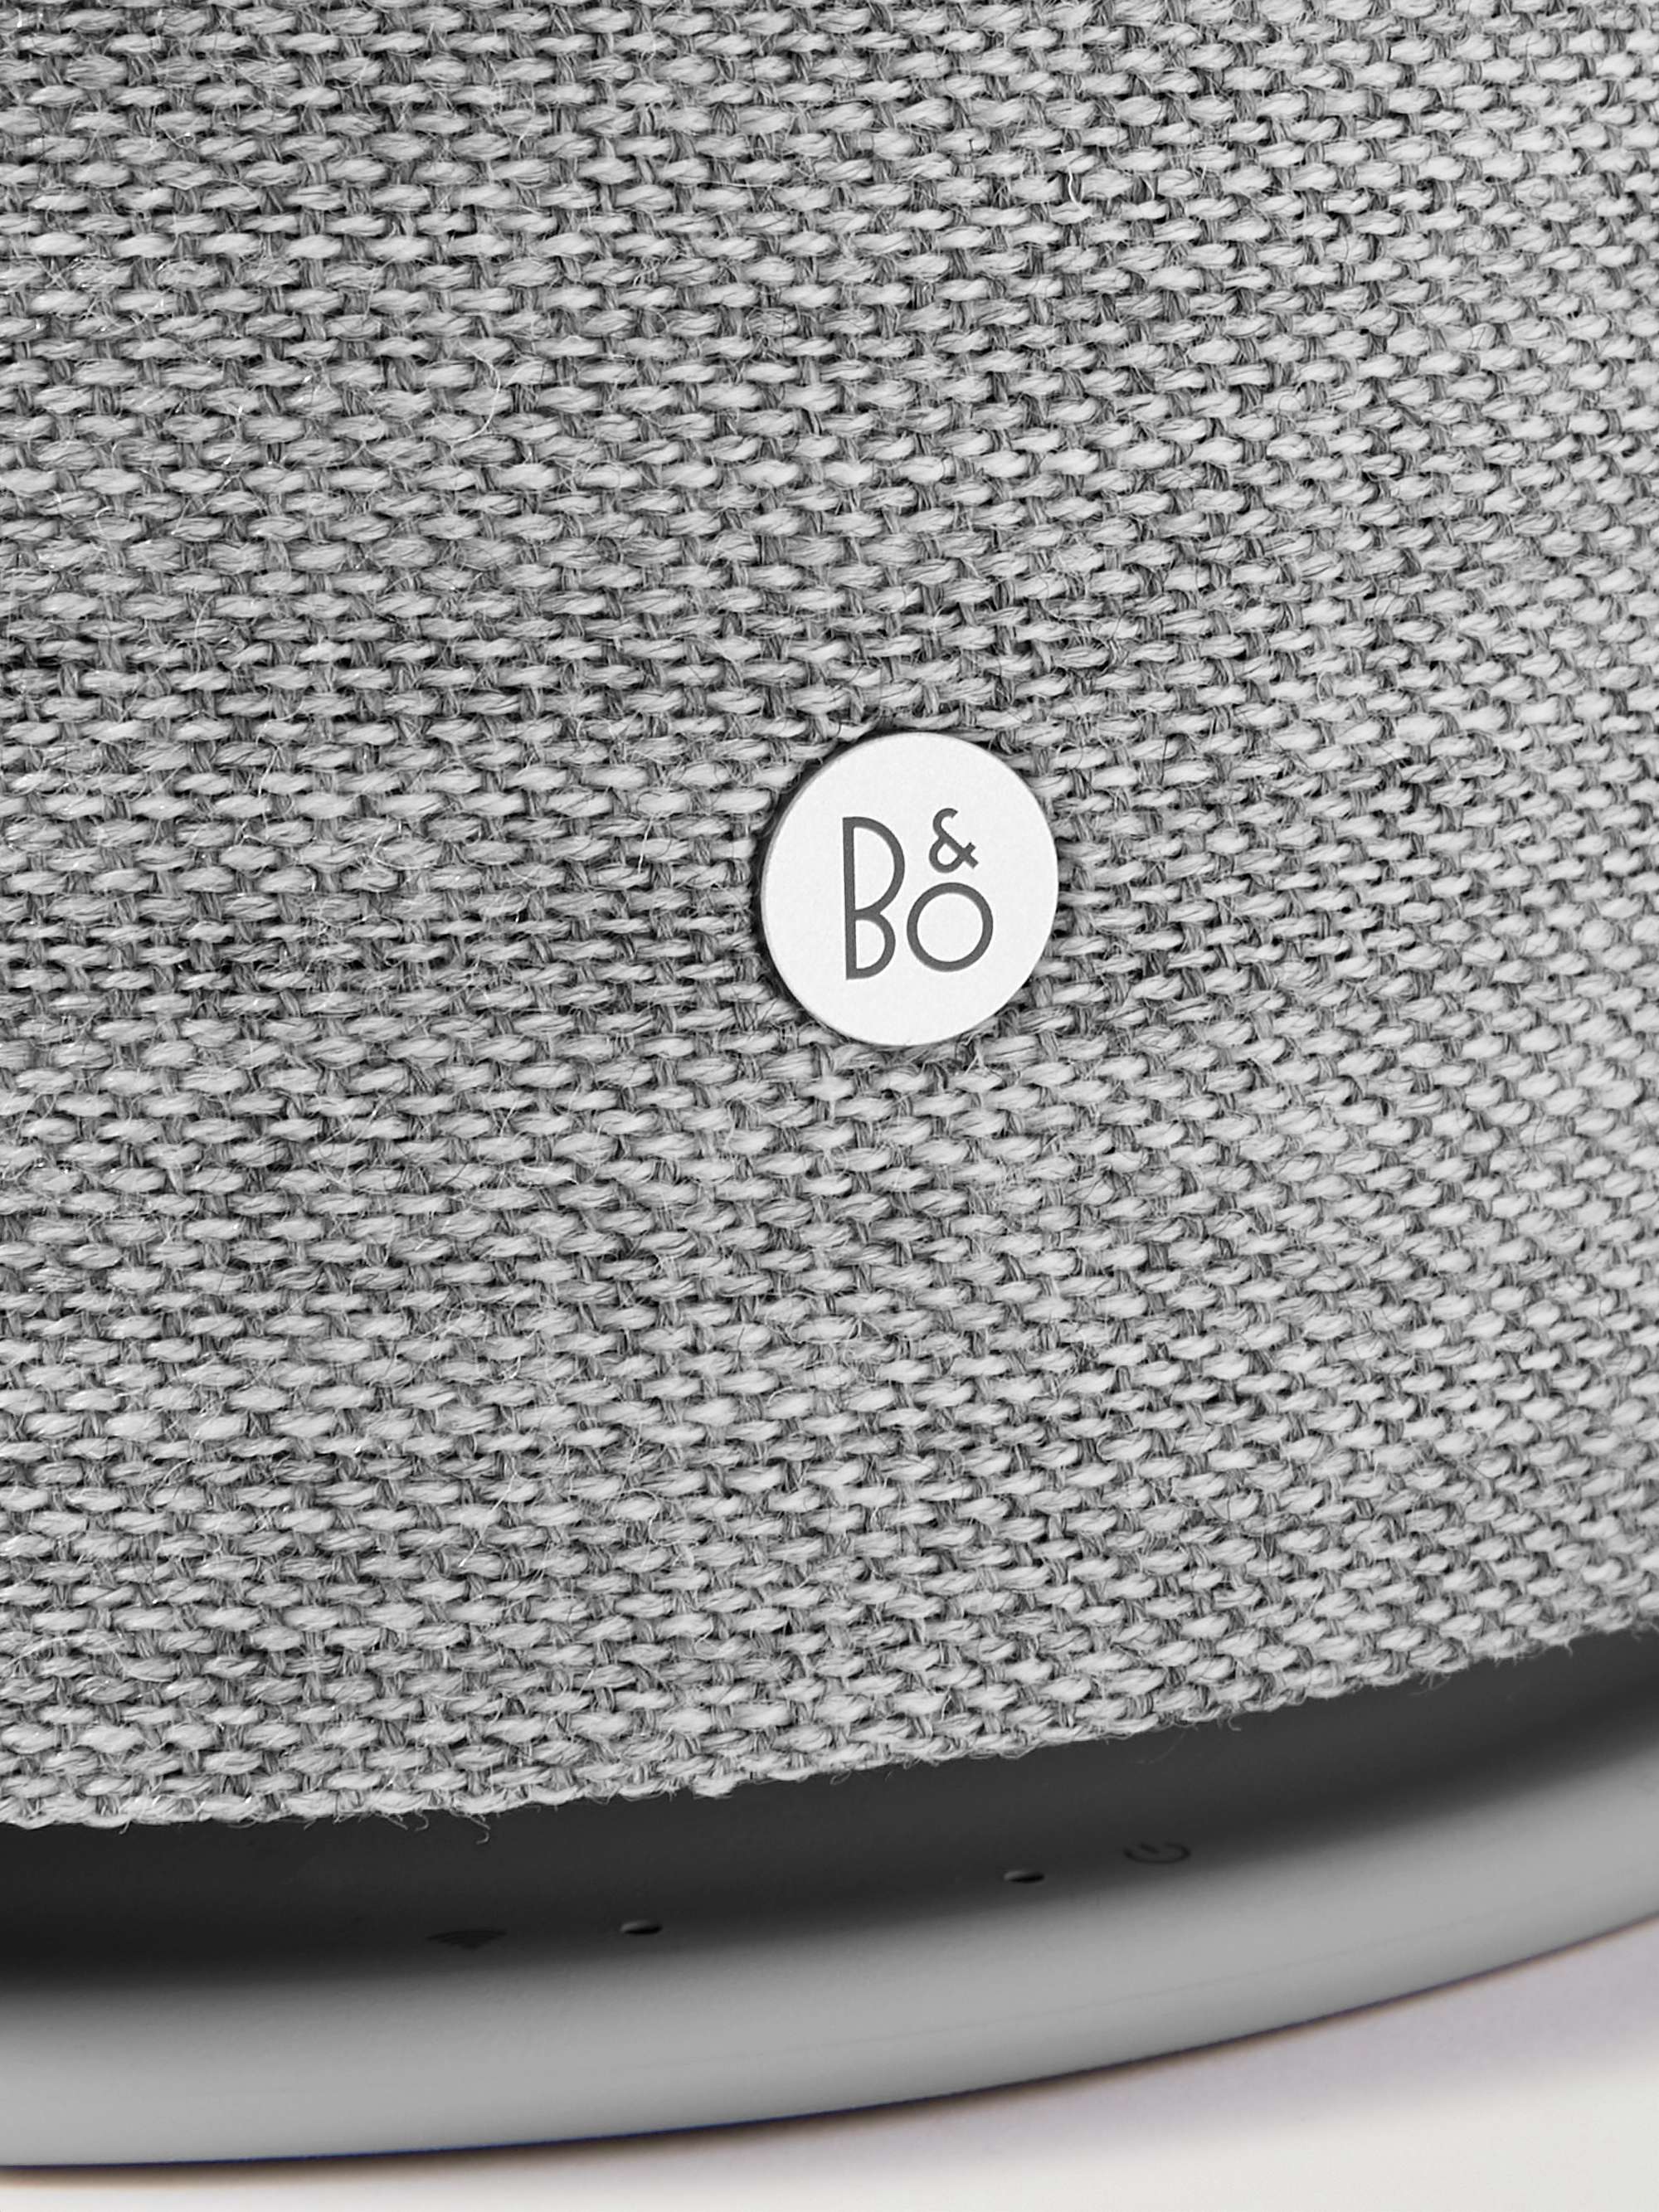 BANG & OLUFSEN Beoplay M5 Wireless Speaker